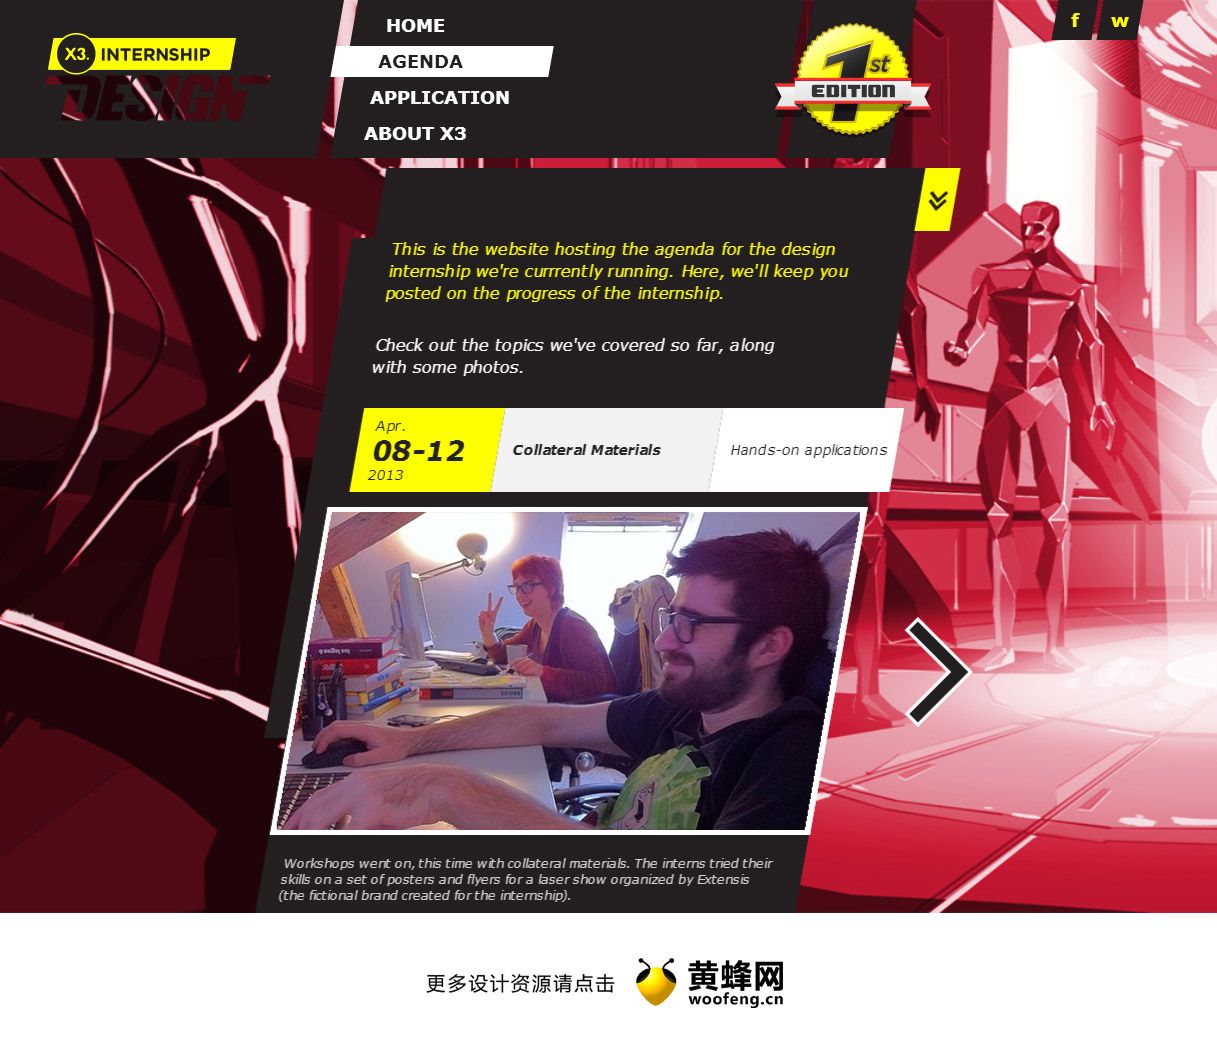 X3一个屡获殊荣的设计工作室，来源自黄蜂网https://woofeng.cn/web/